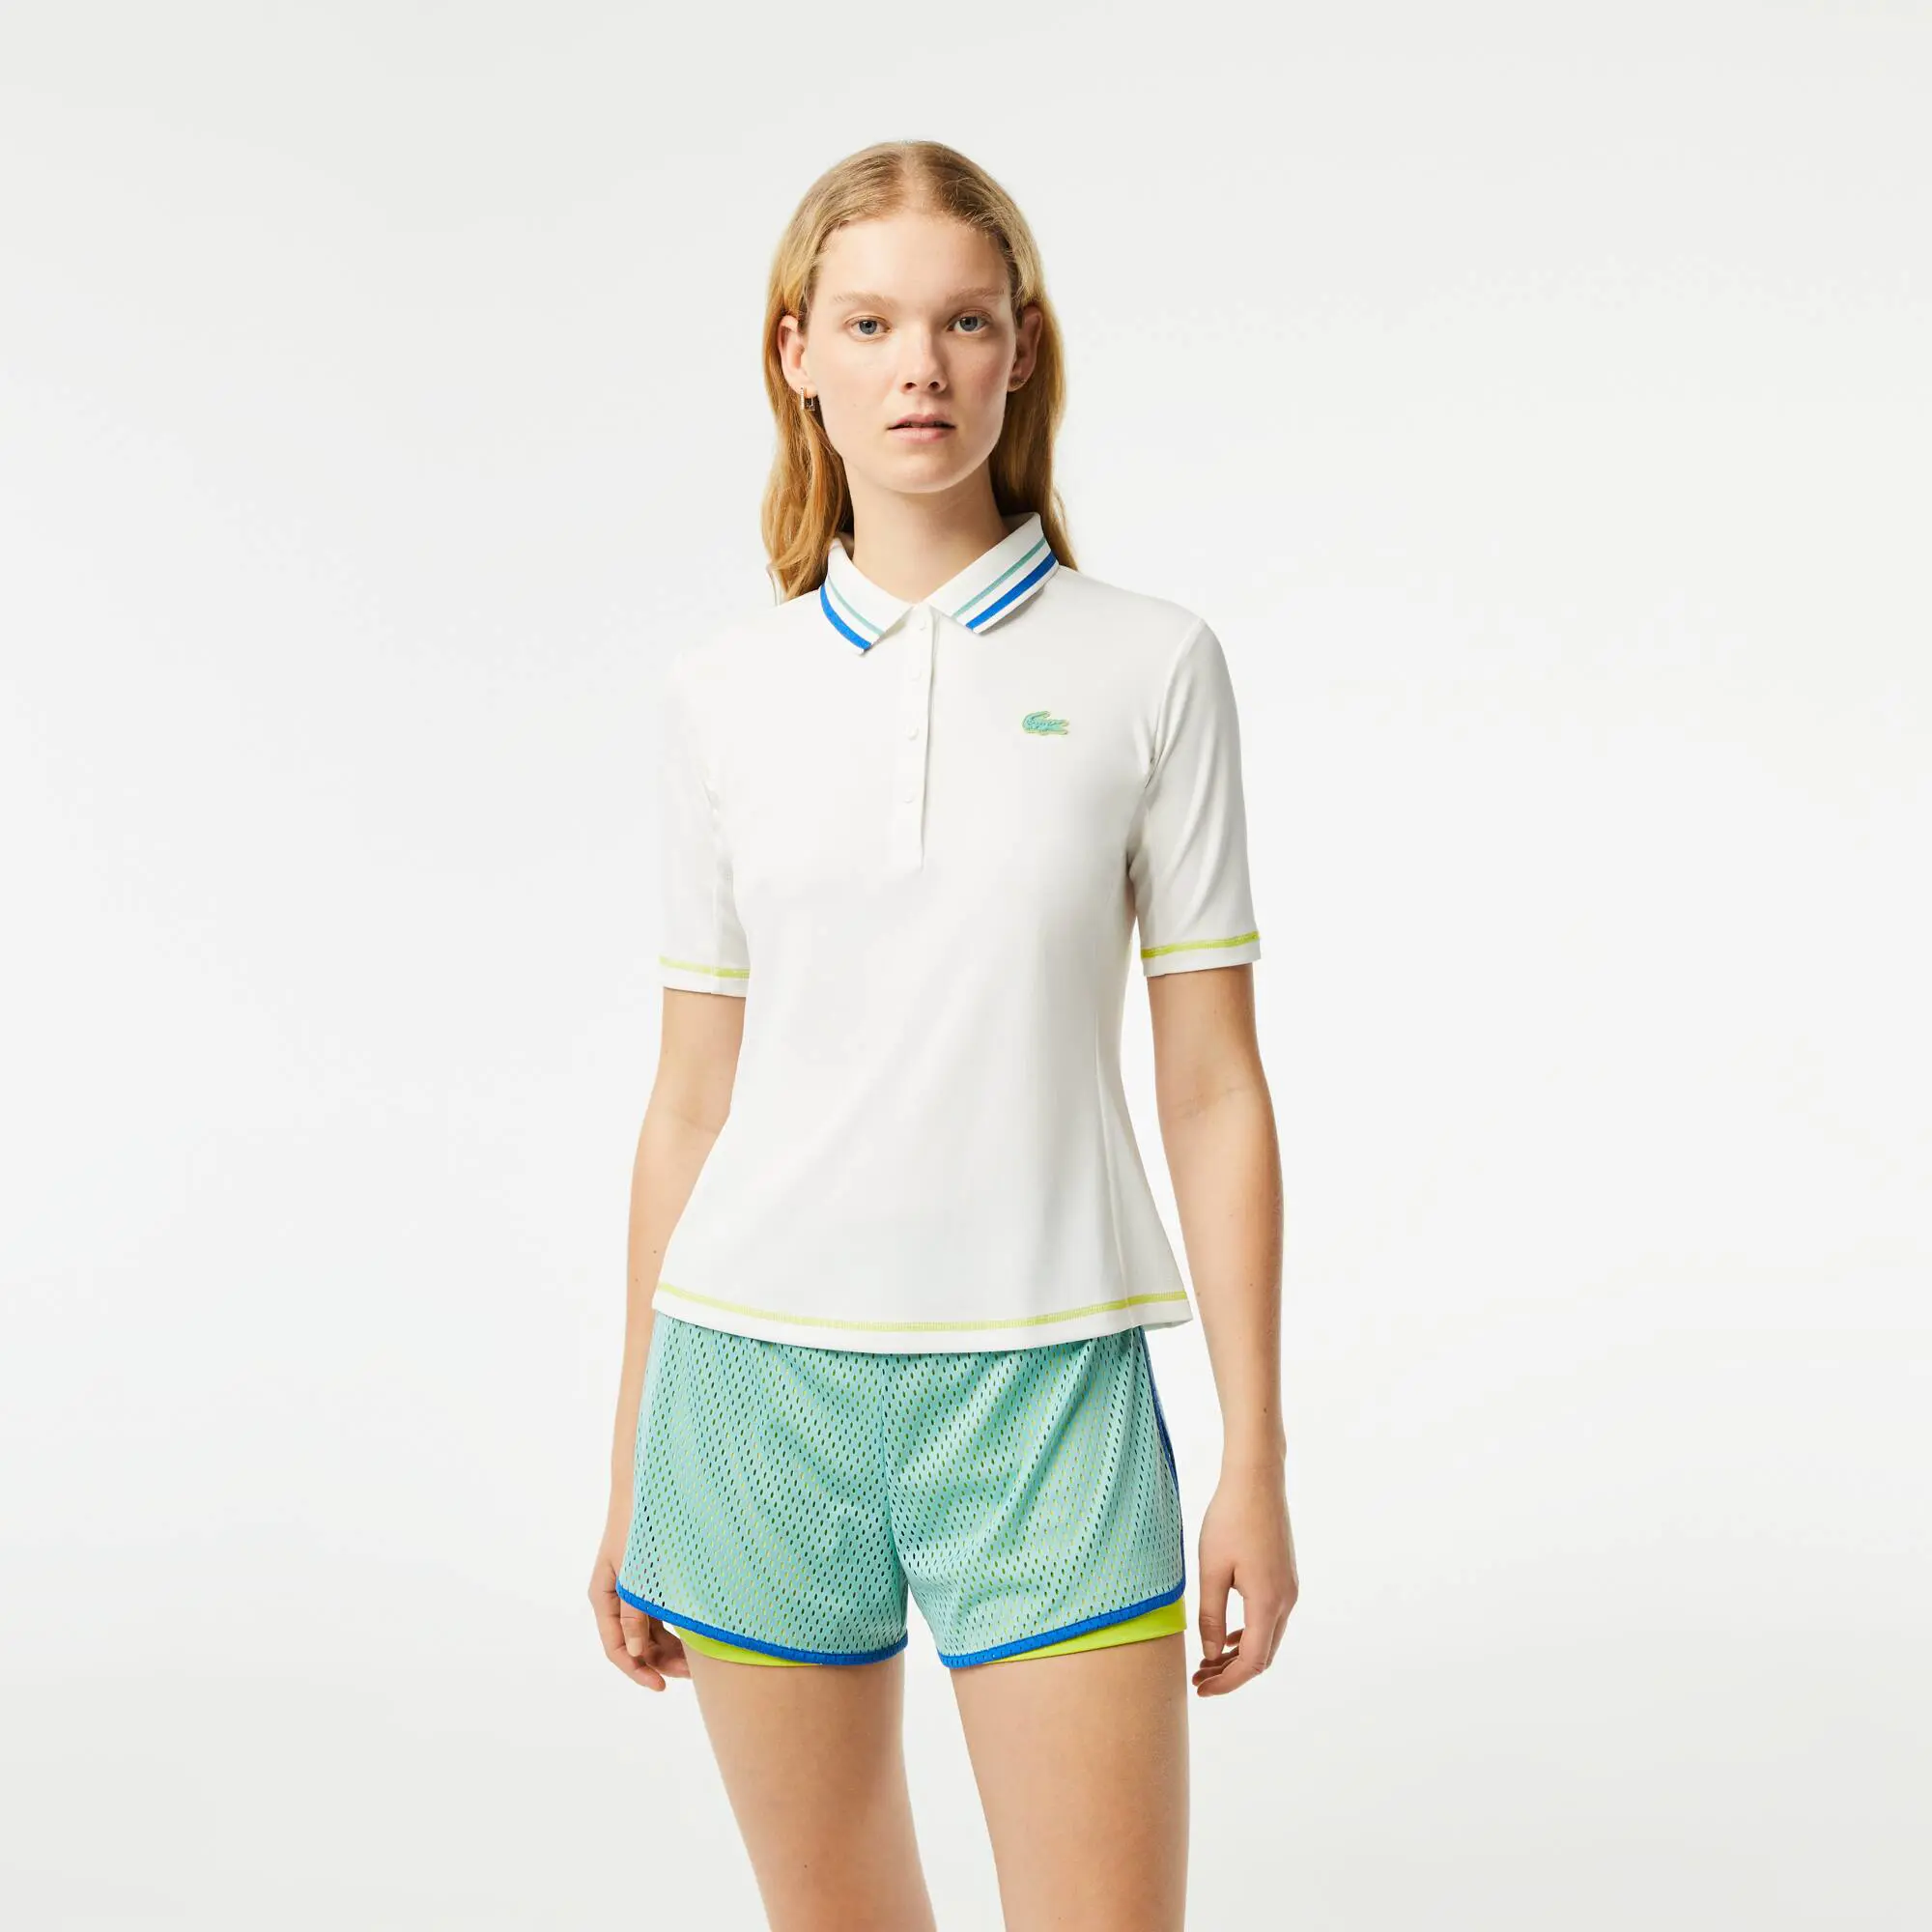 Lacoste Women’s Lacoste Tennis Ultra-dry Pique Polo Shirt. 1